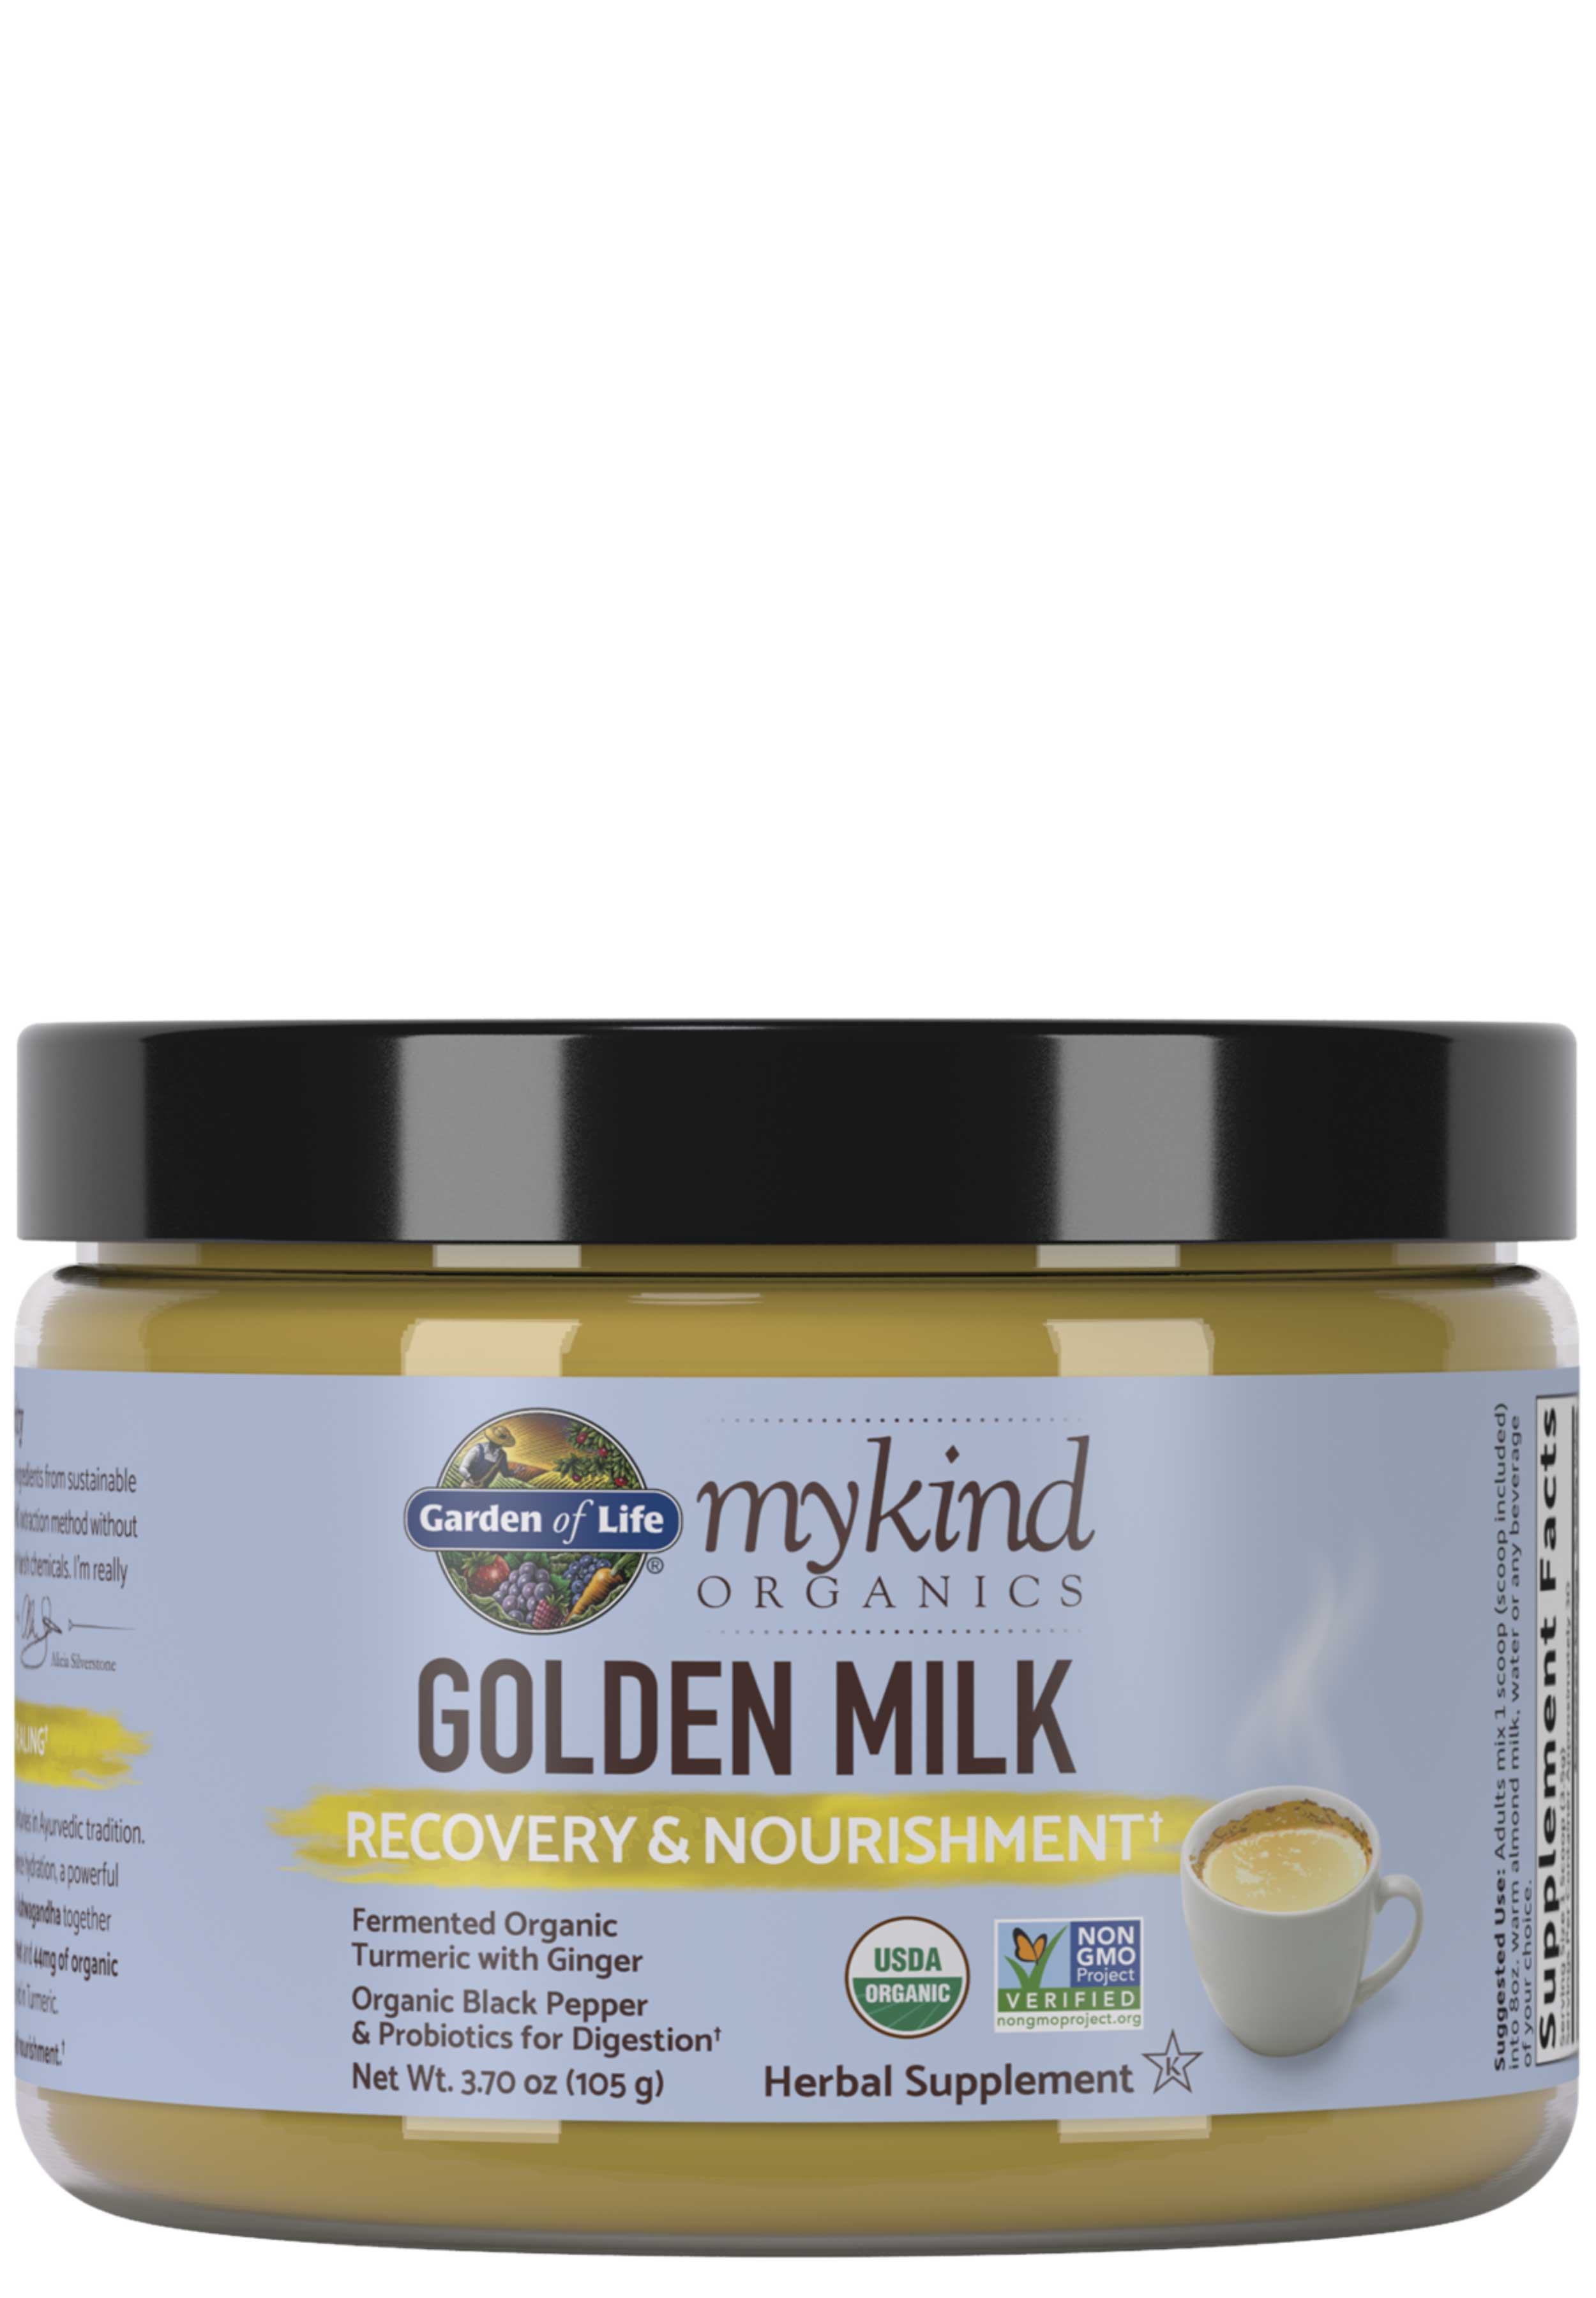 Garden of Life mykind Organics Golden Milk Powder